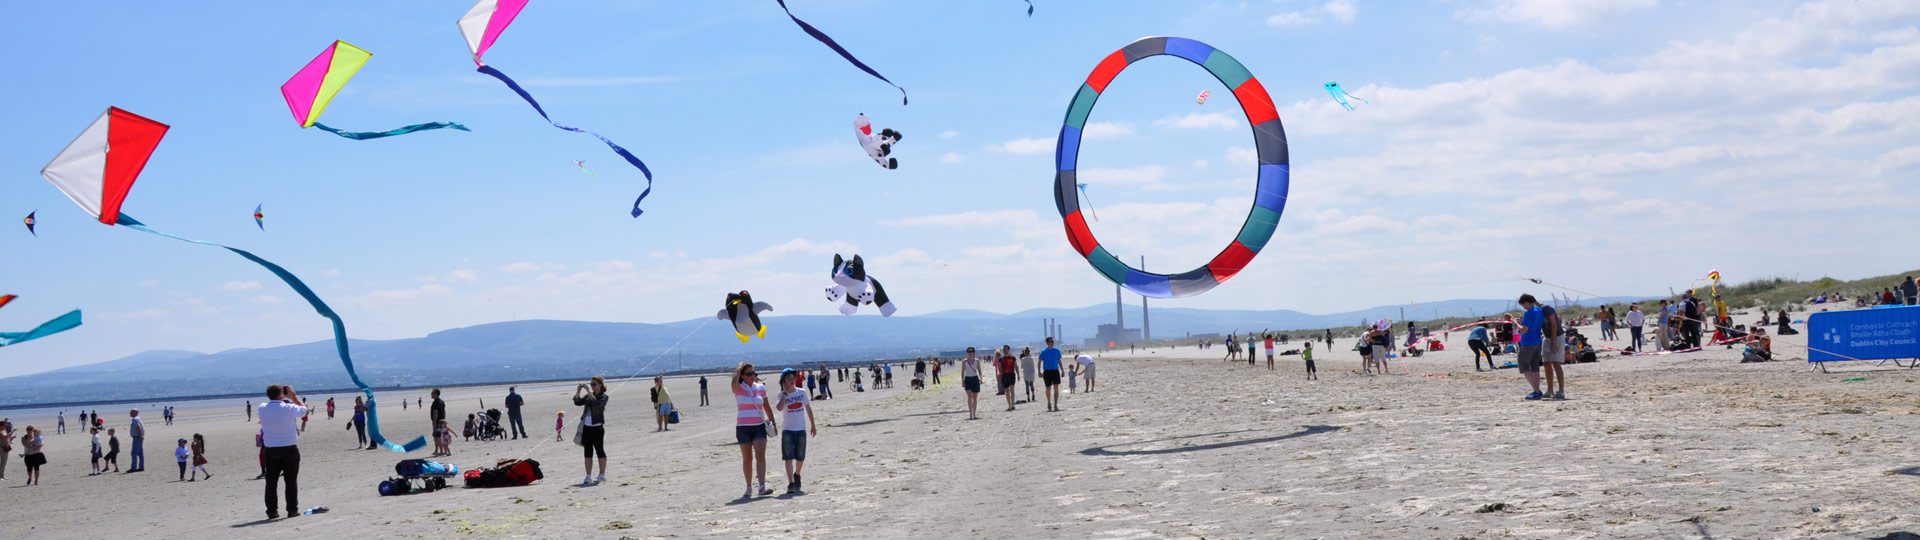 Dollymount beach kite fest